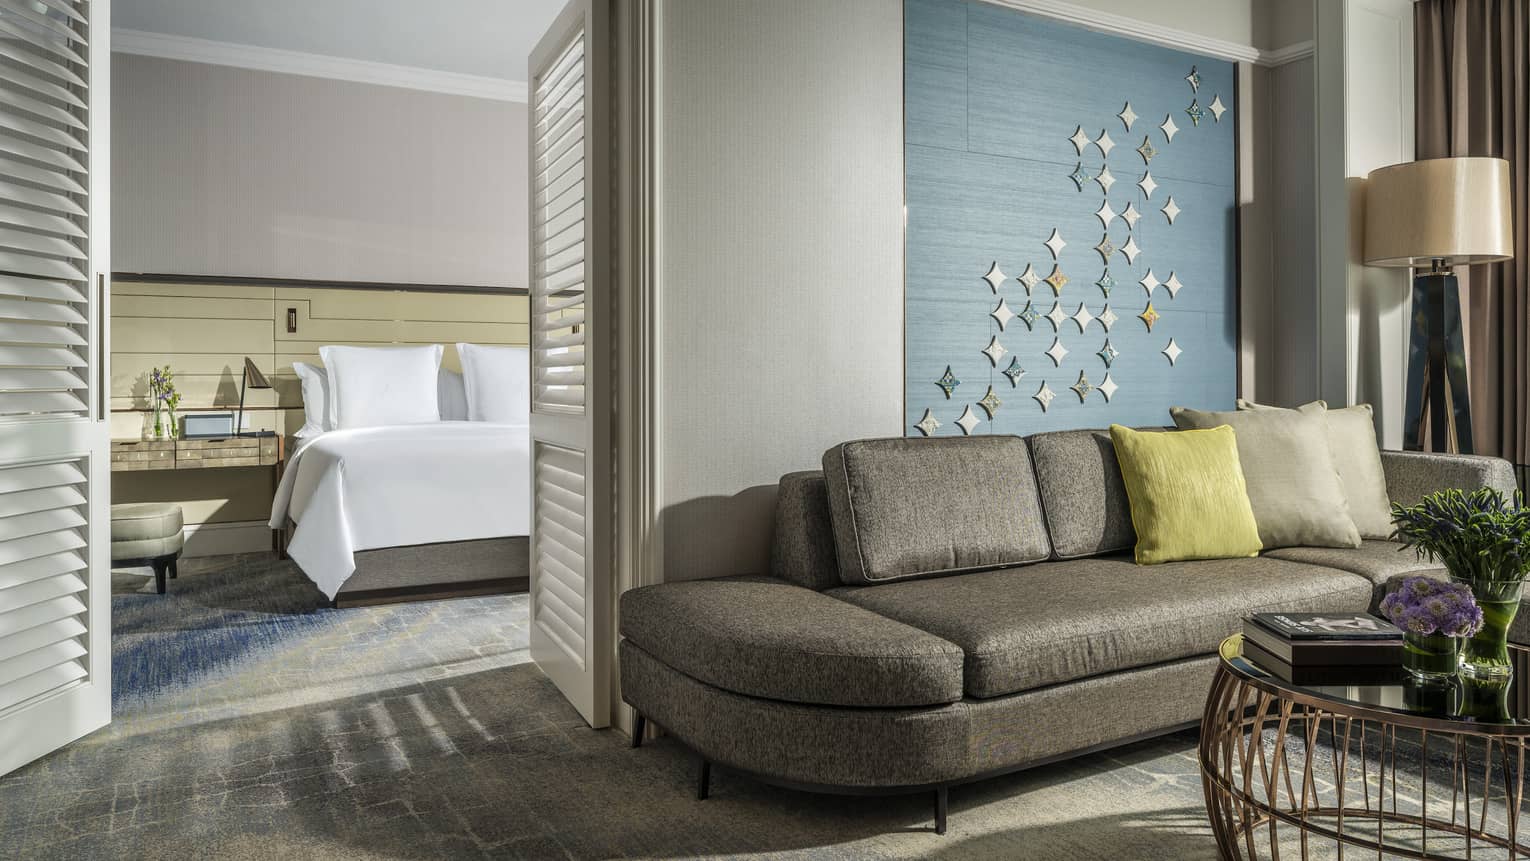 One Bedroom Suite bed in room behind wood shutters, modern grey sofa under textiles